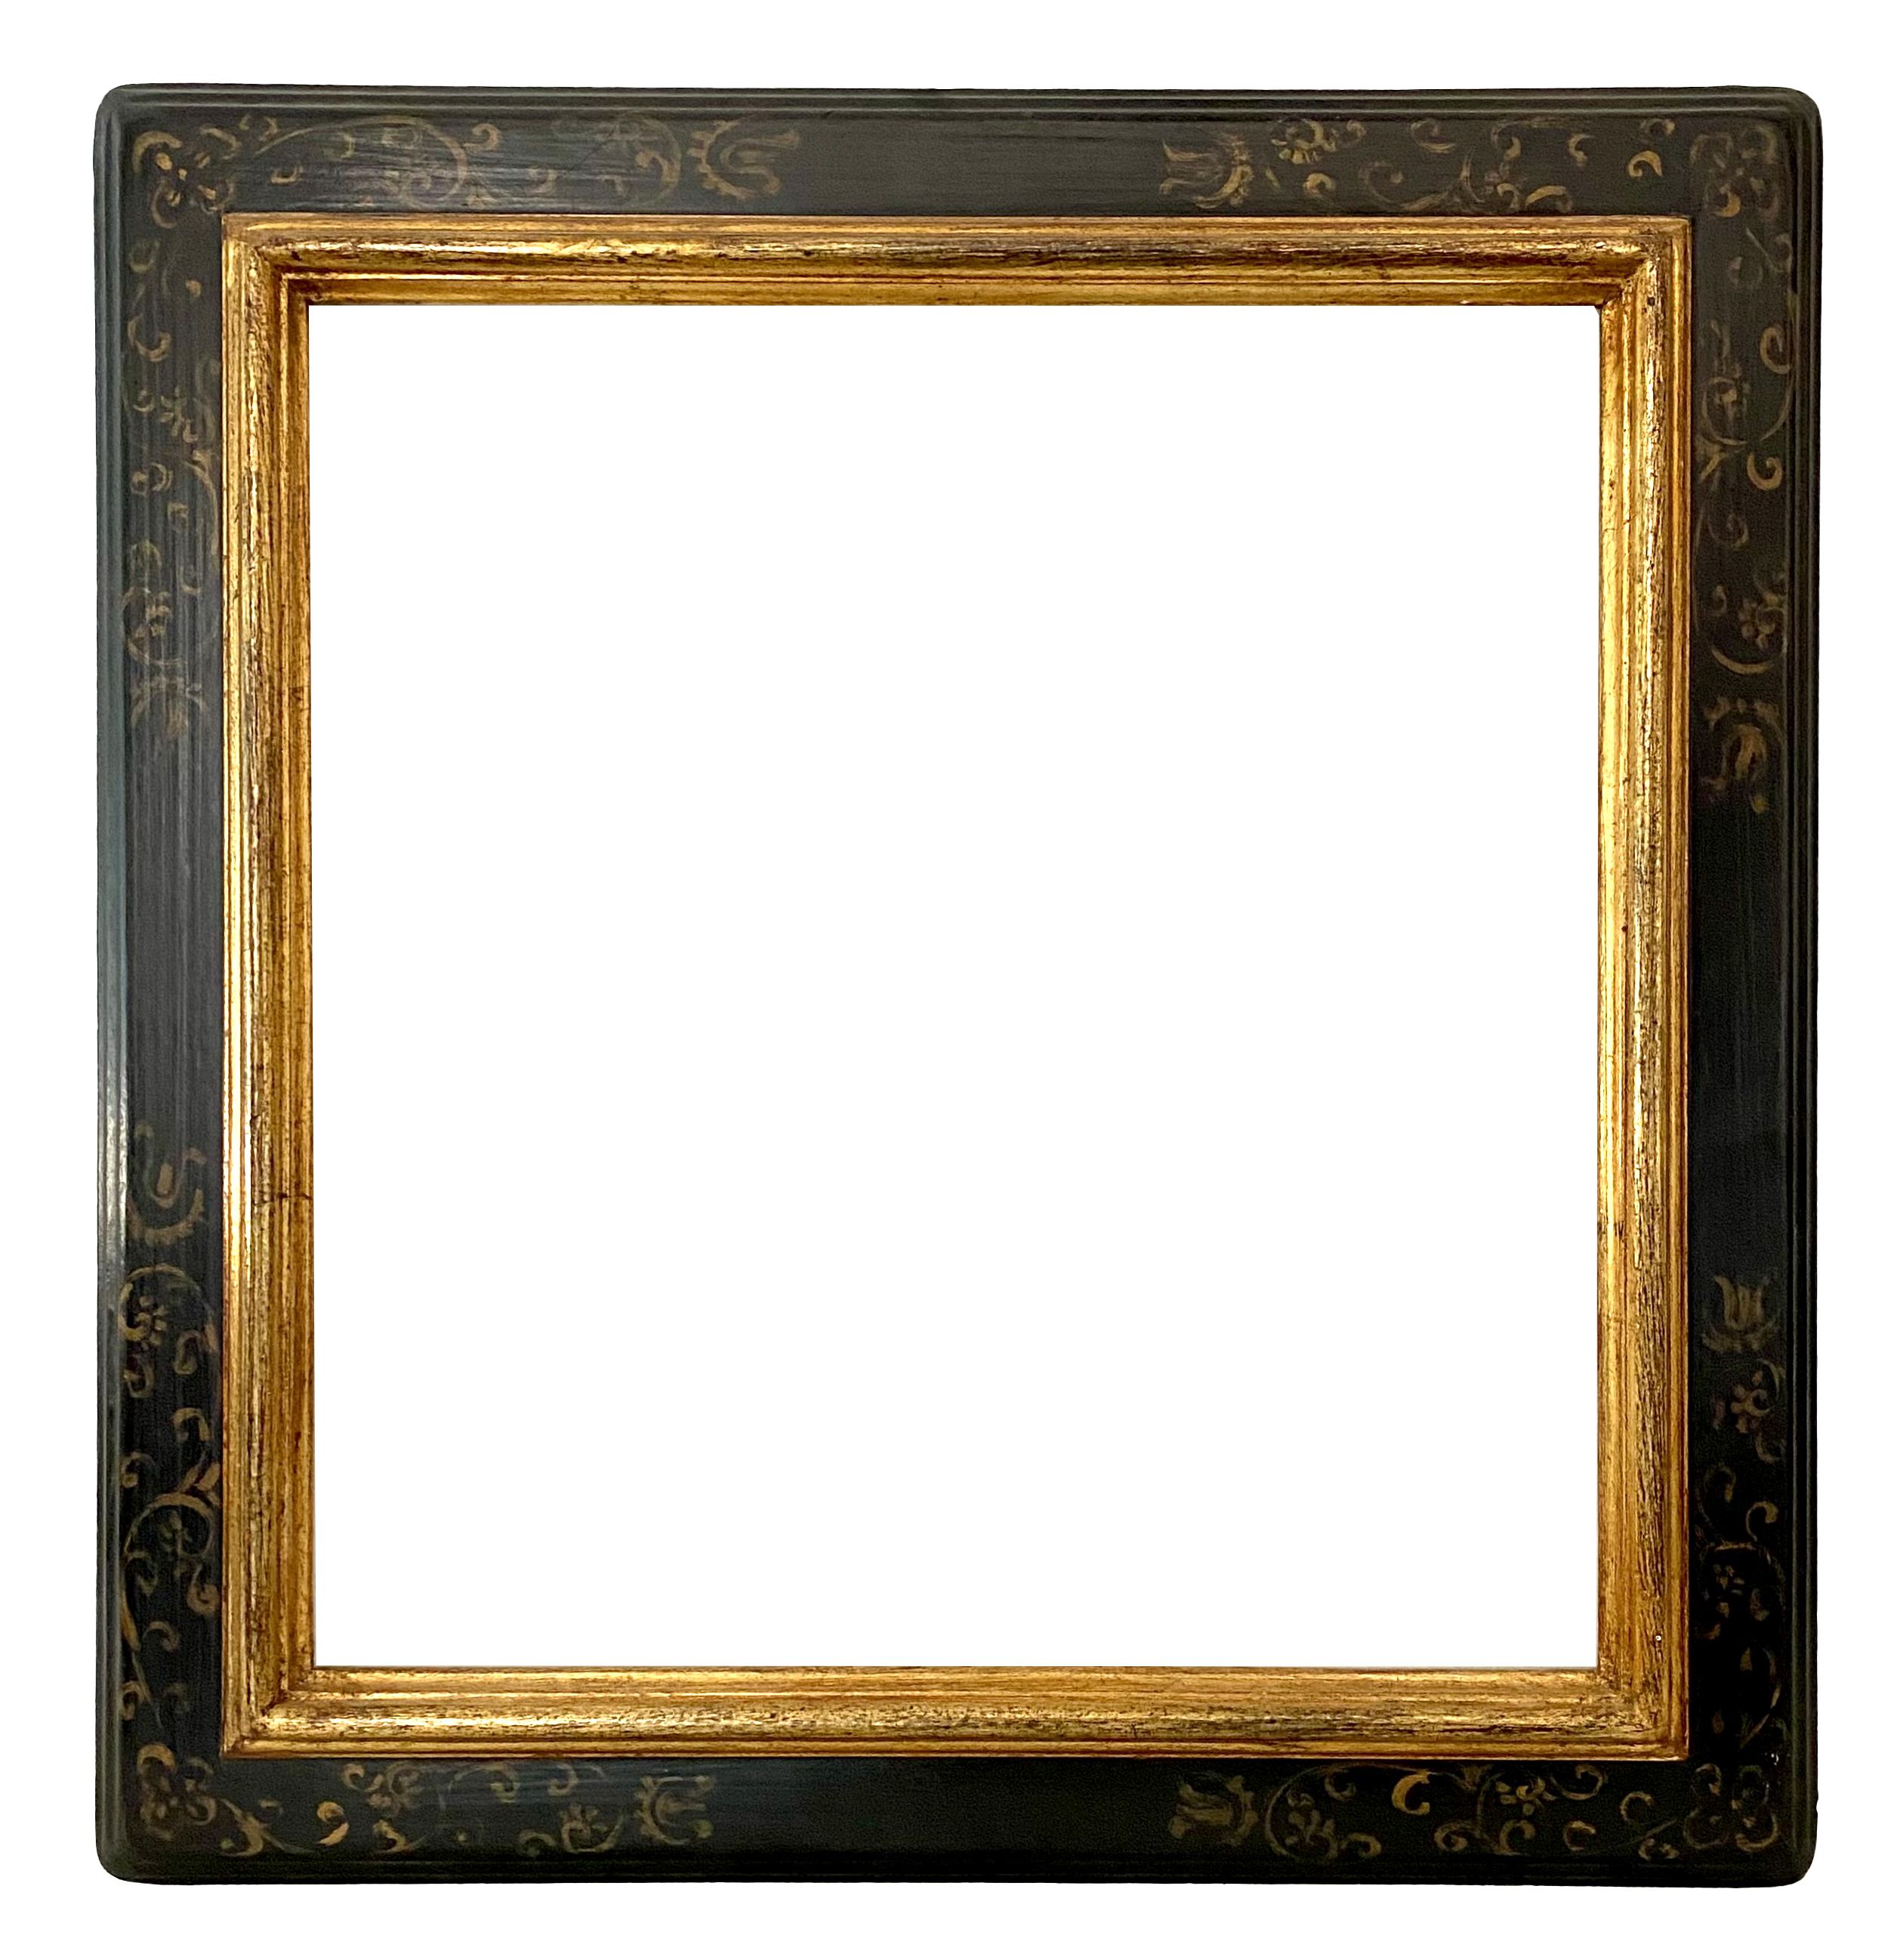 Renaissance style frame - 39,50 x 37,20 - REF - 410